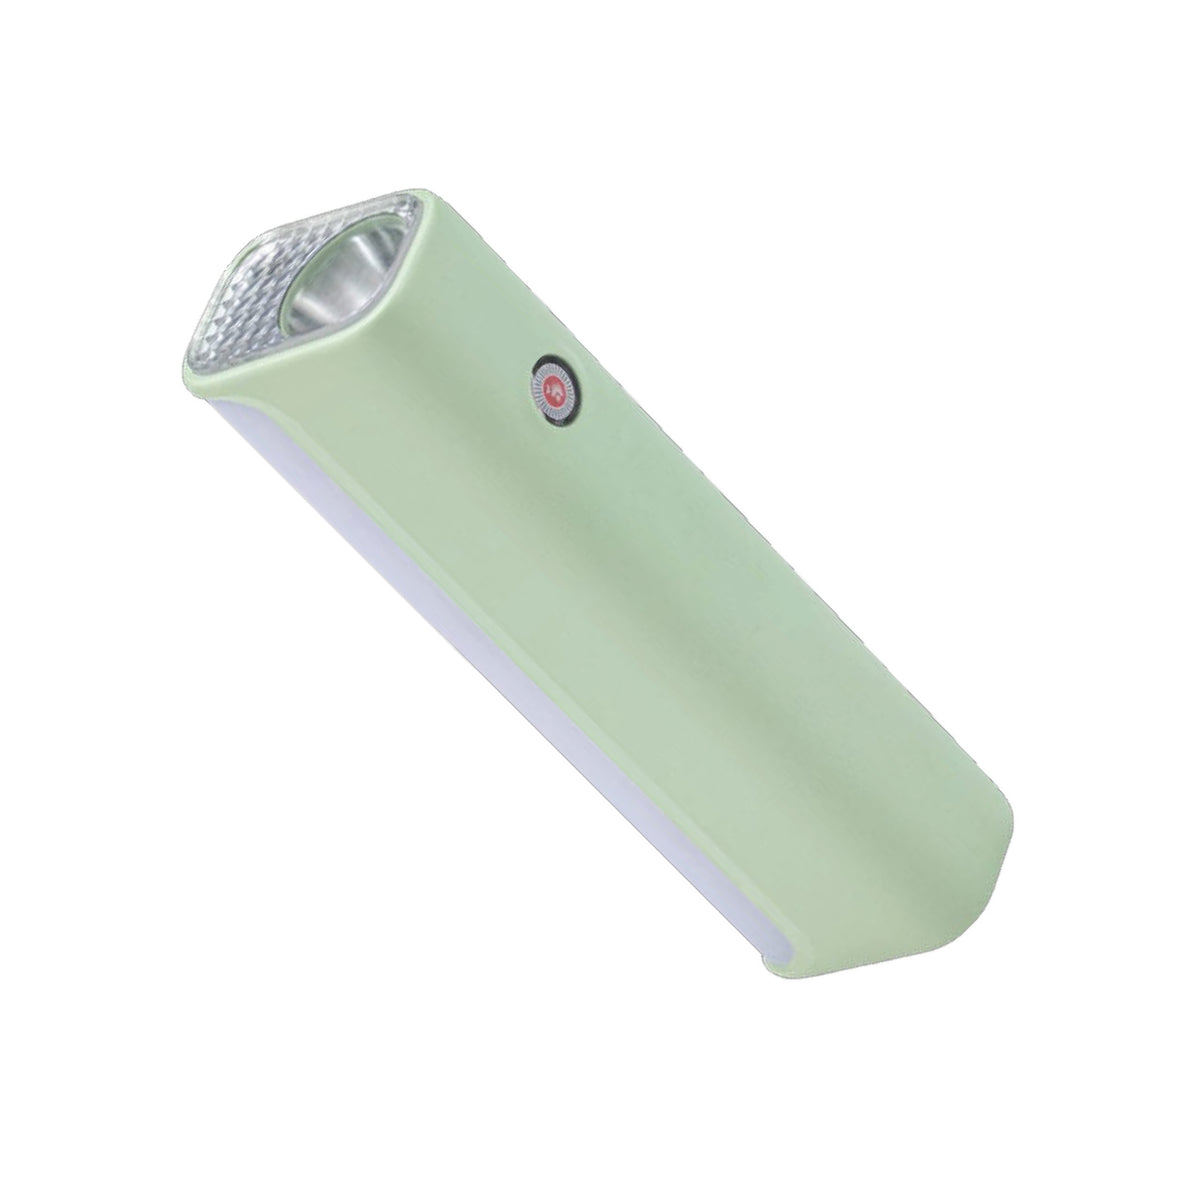 Mr.Light Rechargeable Pocket Emergency Light, MRGD004